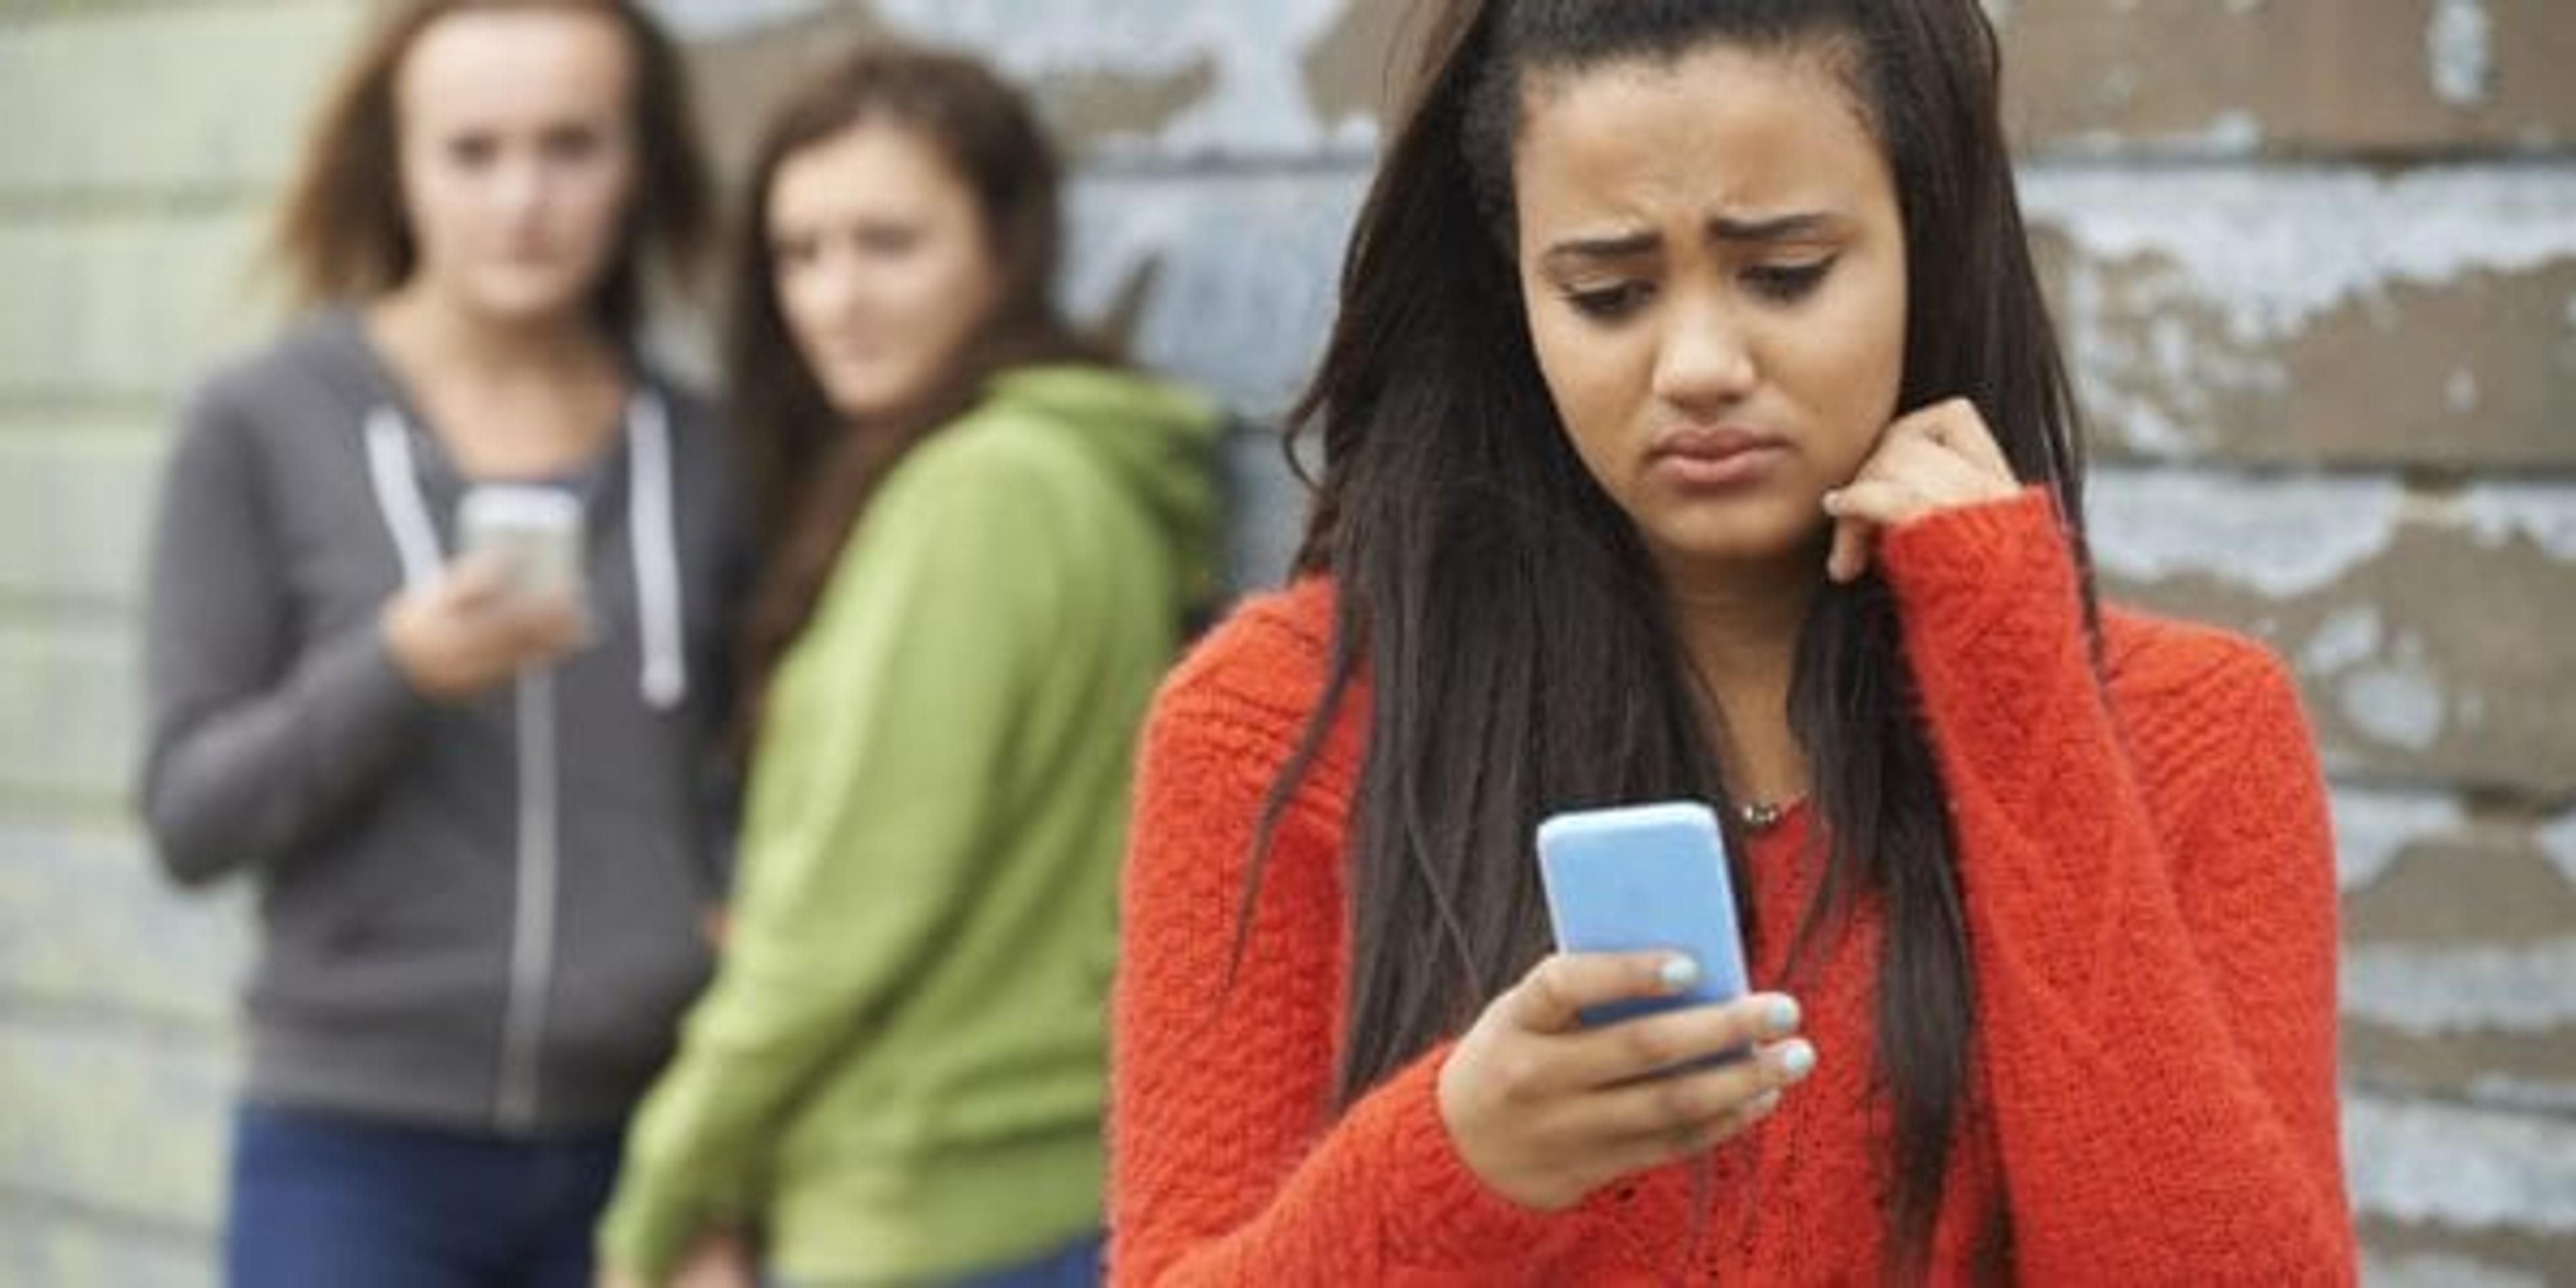 Teen girl being bullied online